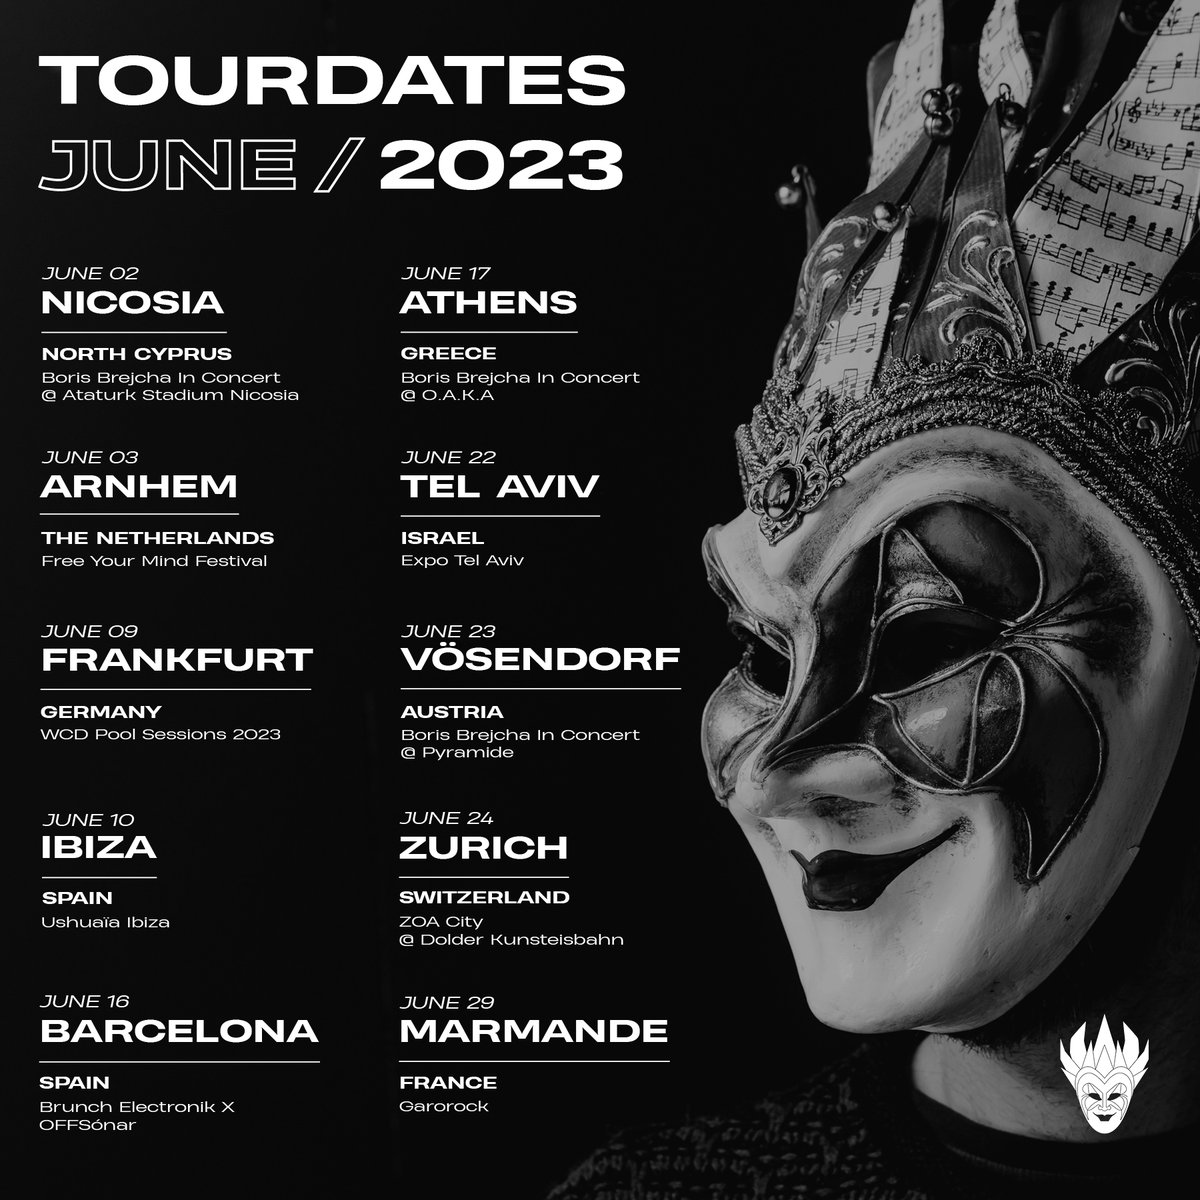 Upcoming Tourdates 🃏
June 2023
__
#tourdates #june #joker